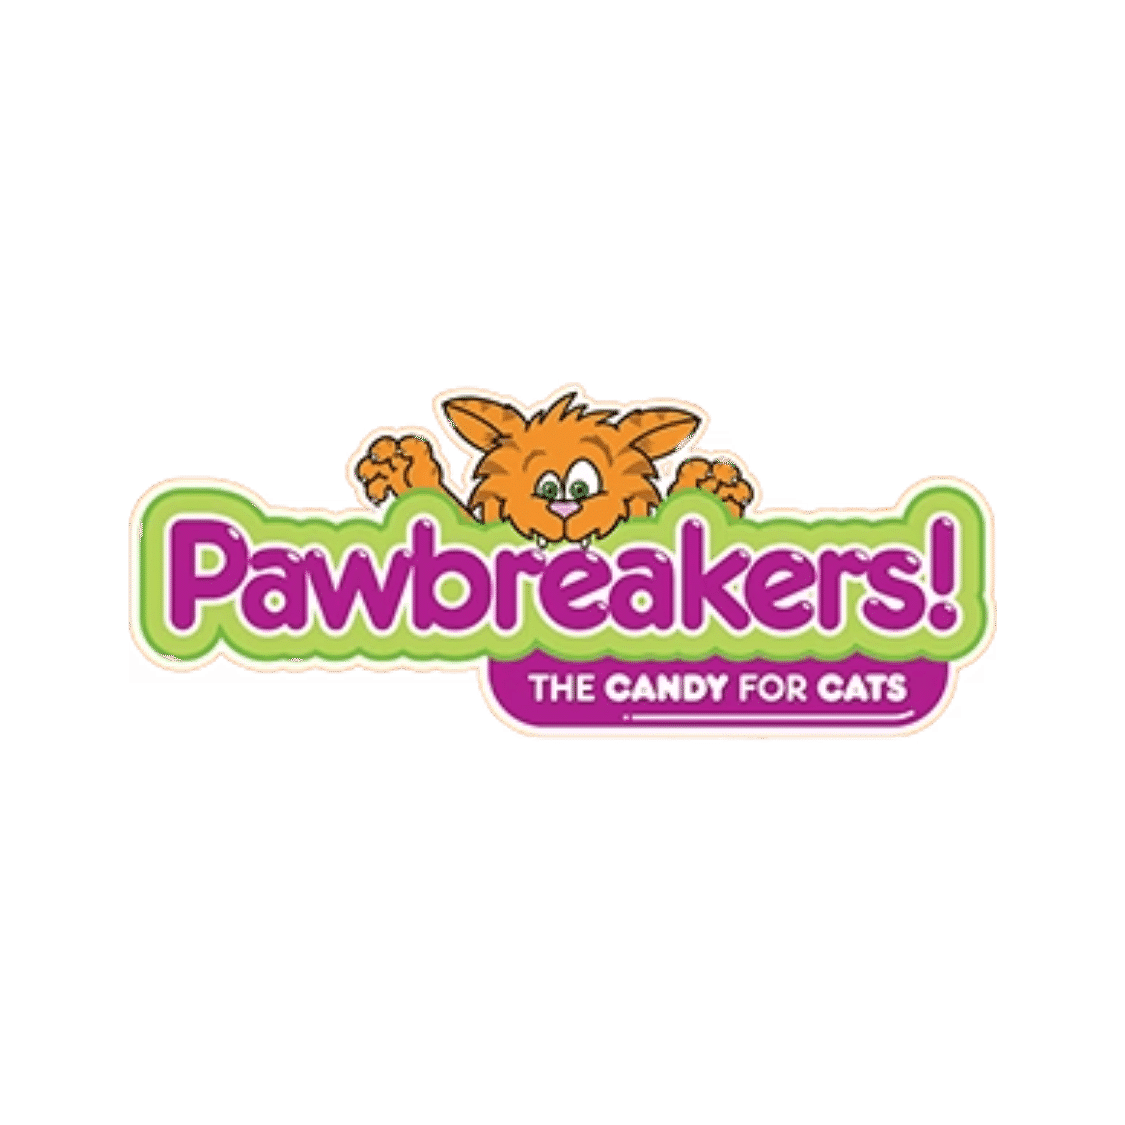 Pawbreakers